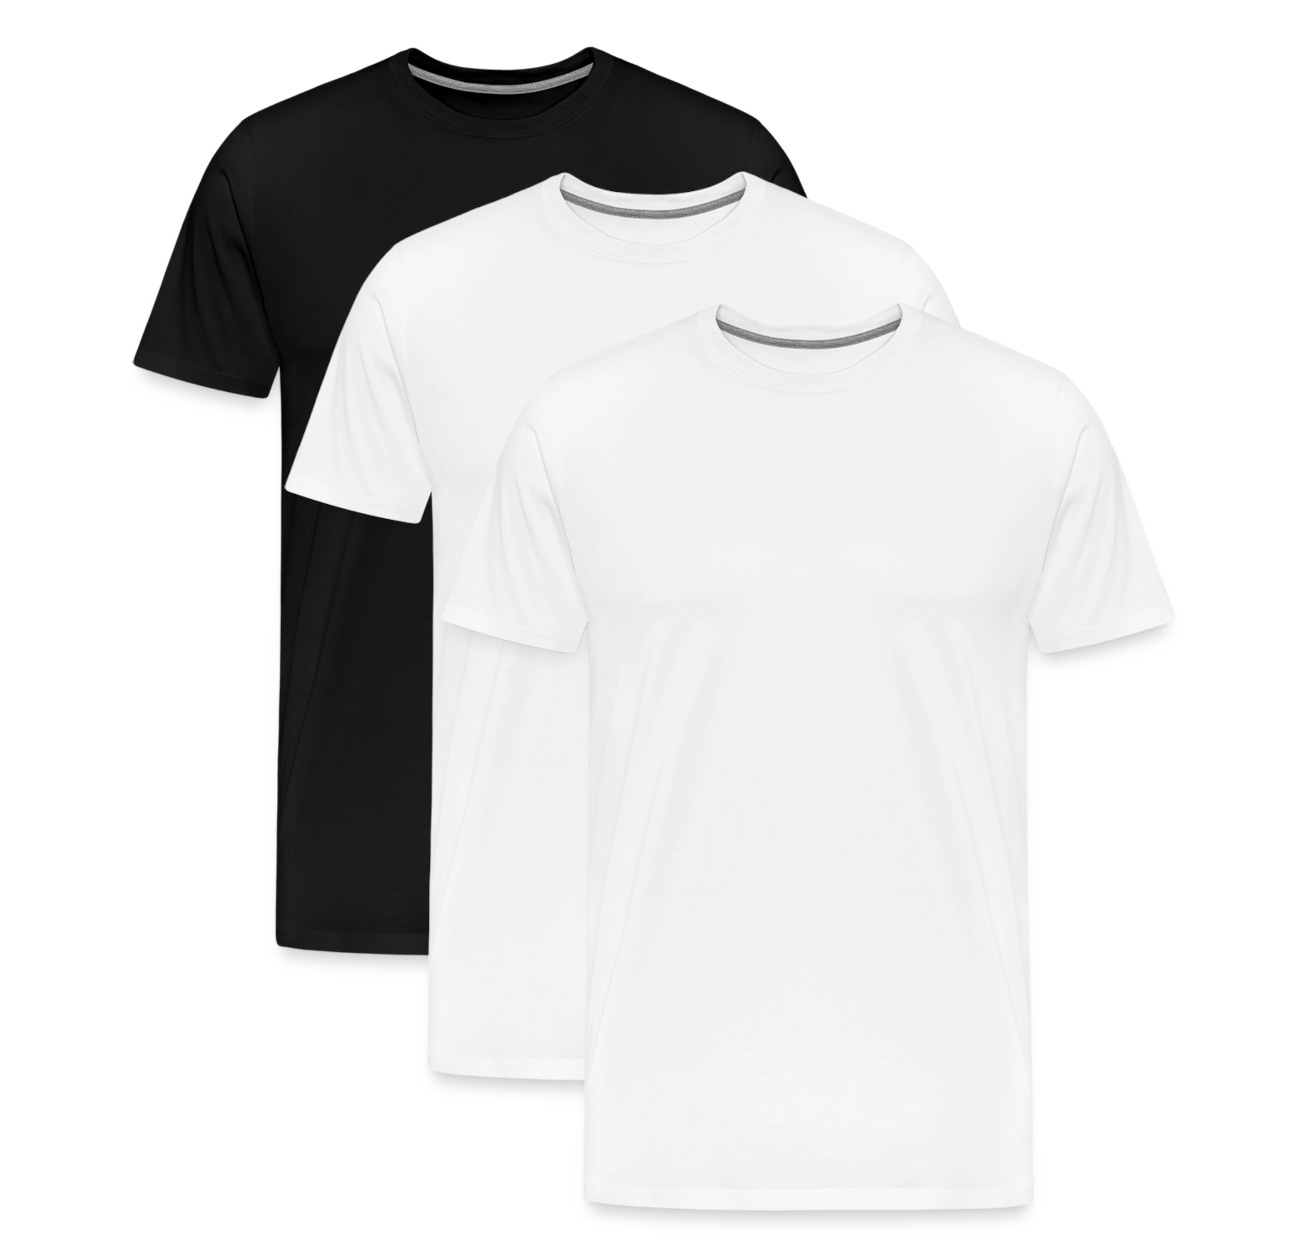 Fluent Tee Variety 3-Pack (Size M) - Men's Premium T-Shirt from fluentclothing.com